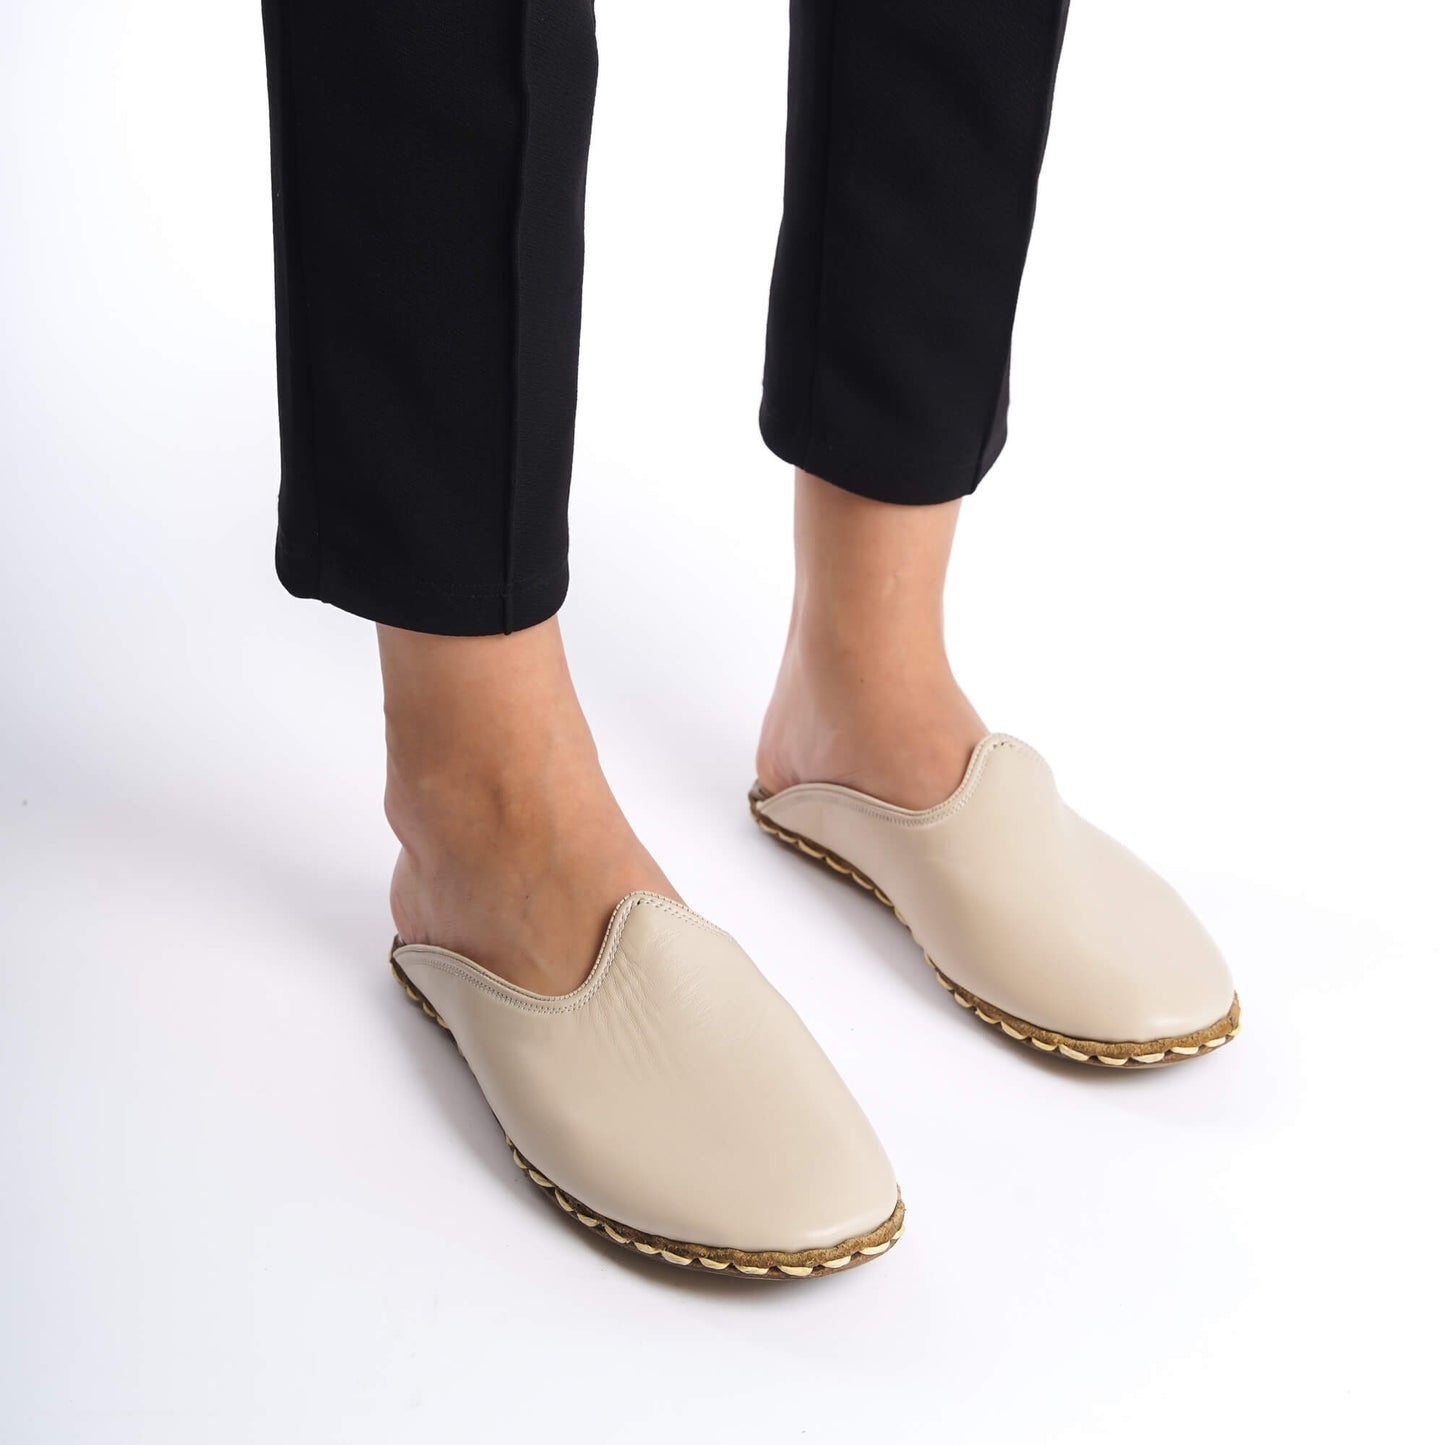 Minimalist Beige Leather Mules – Women's Elegant Summer Footwear with Stitched Sole